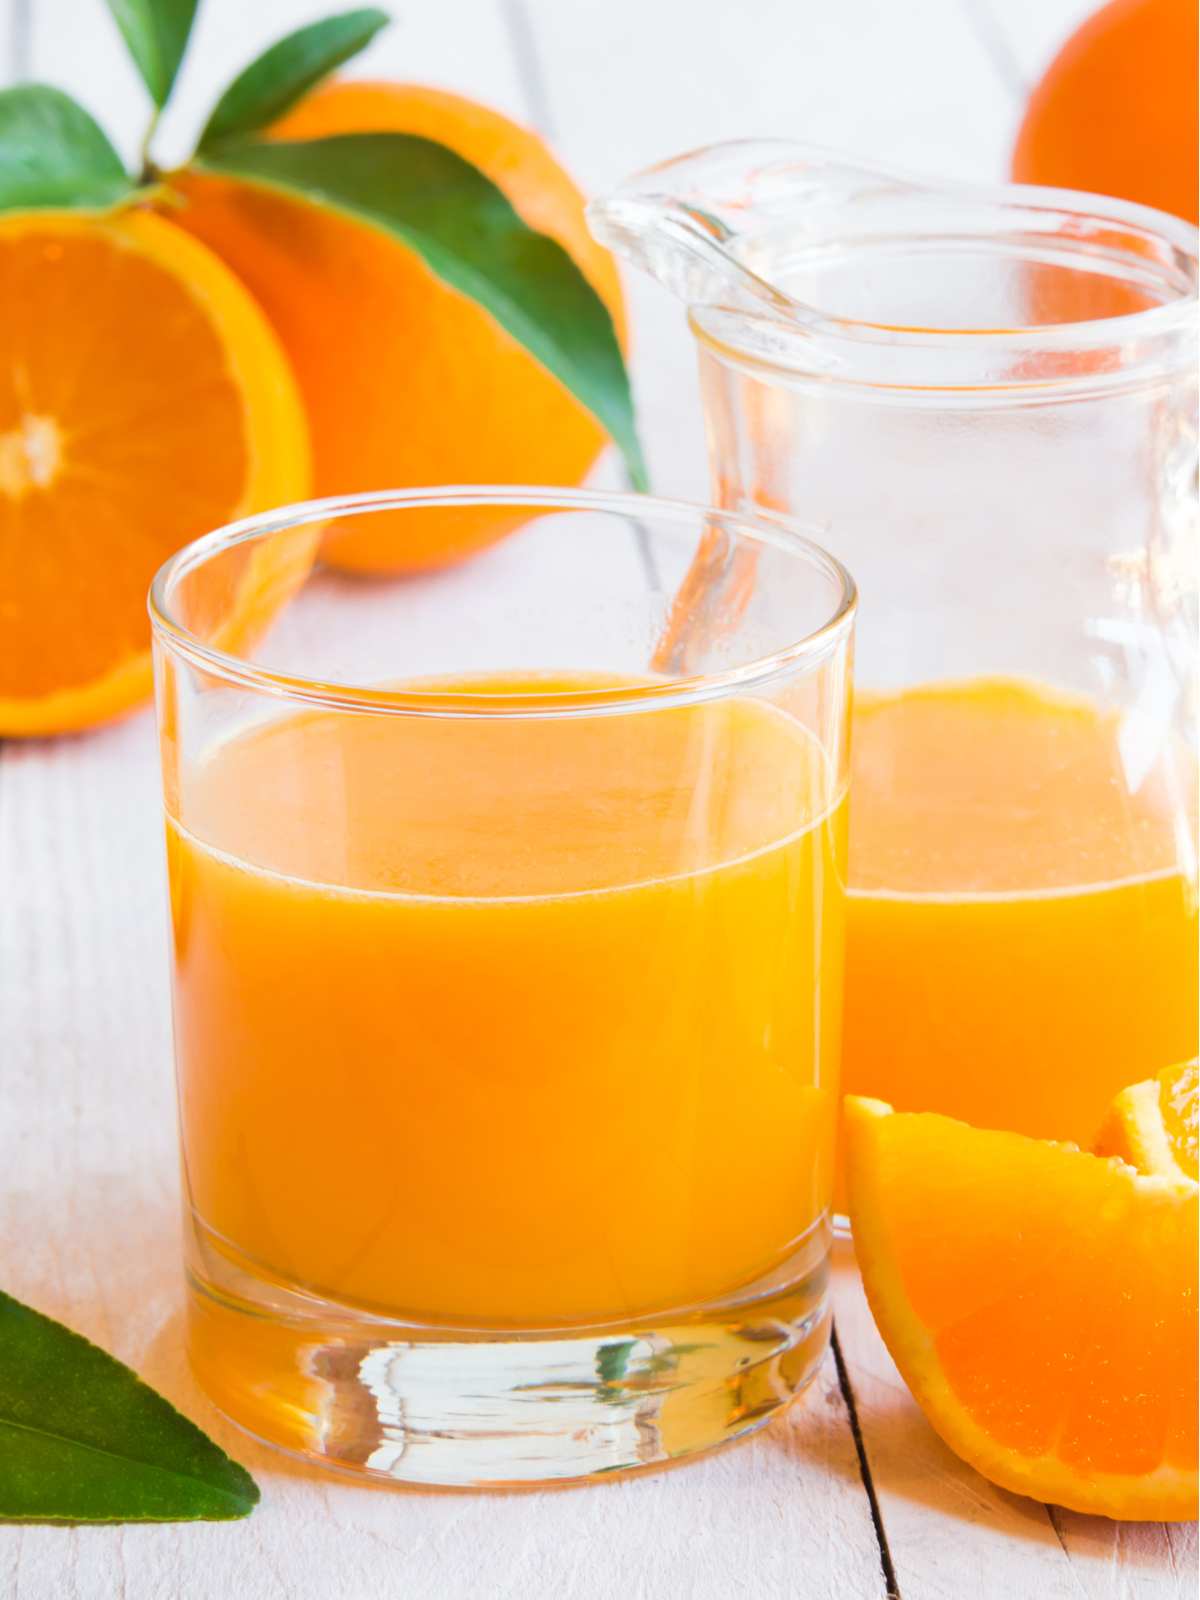 A glass of orange juice next to a pitcher of orange juice.